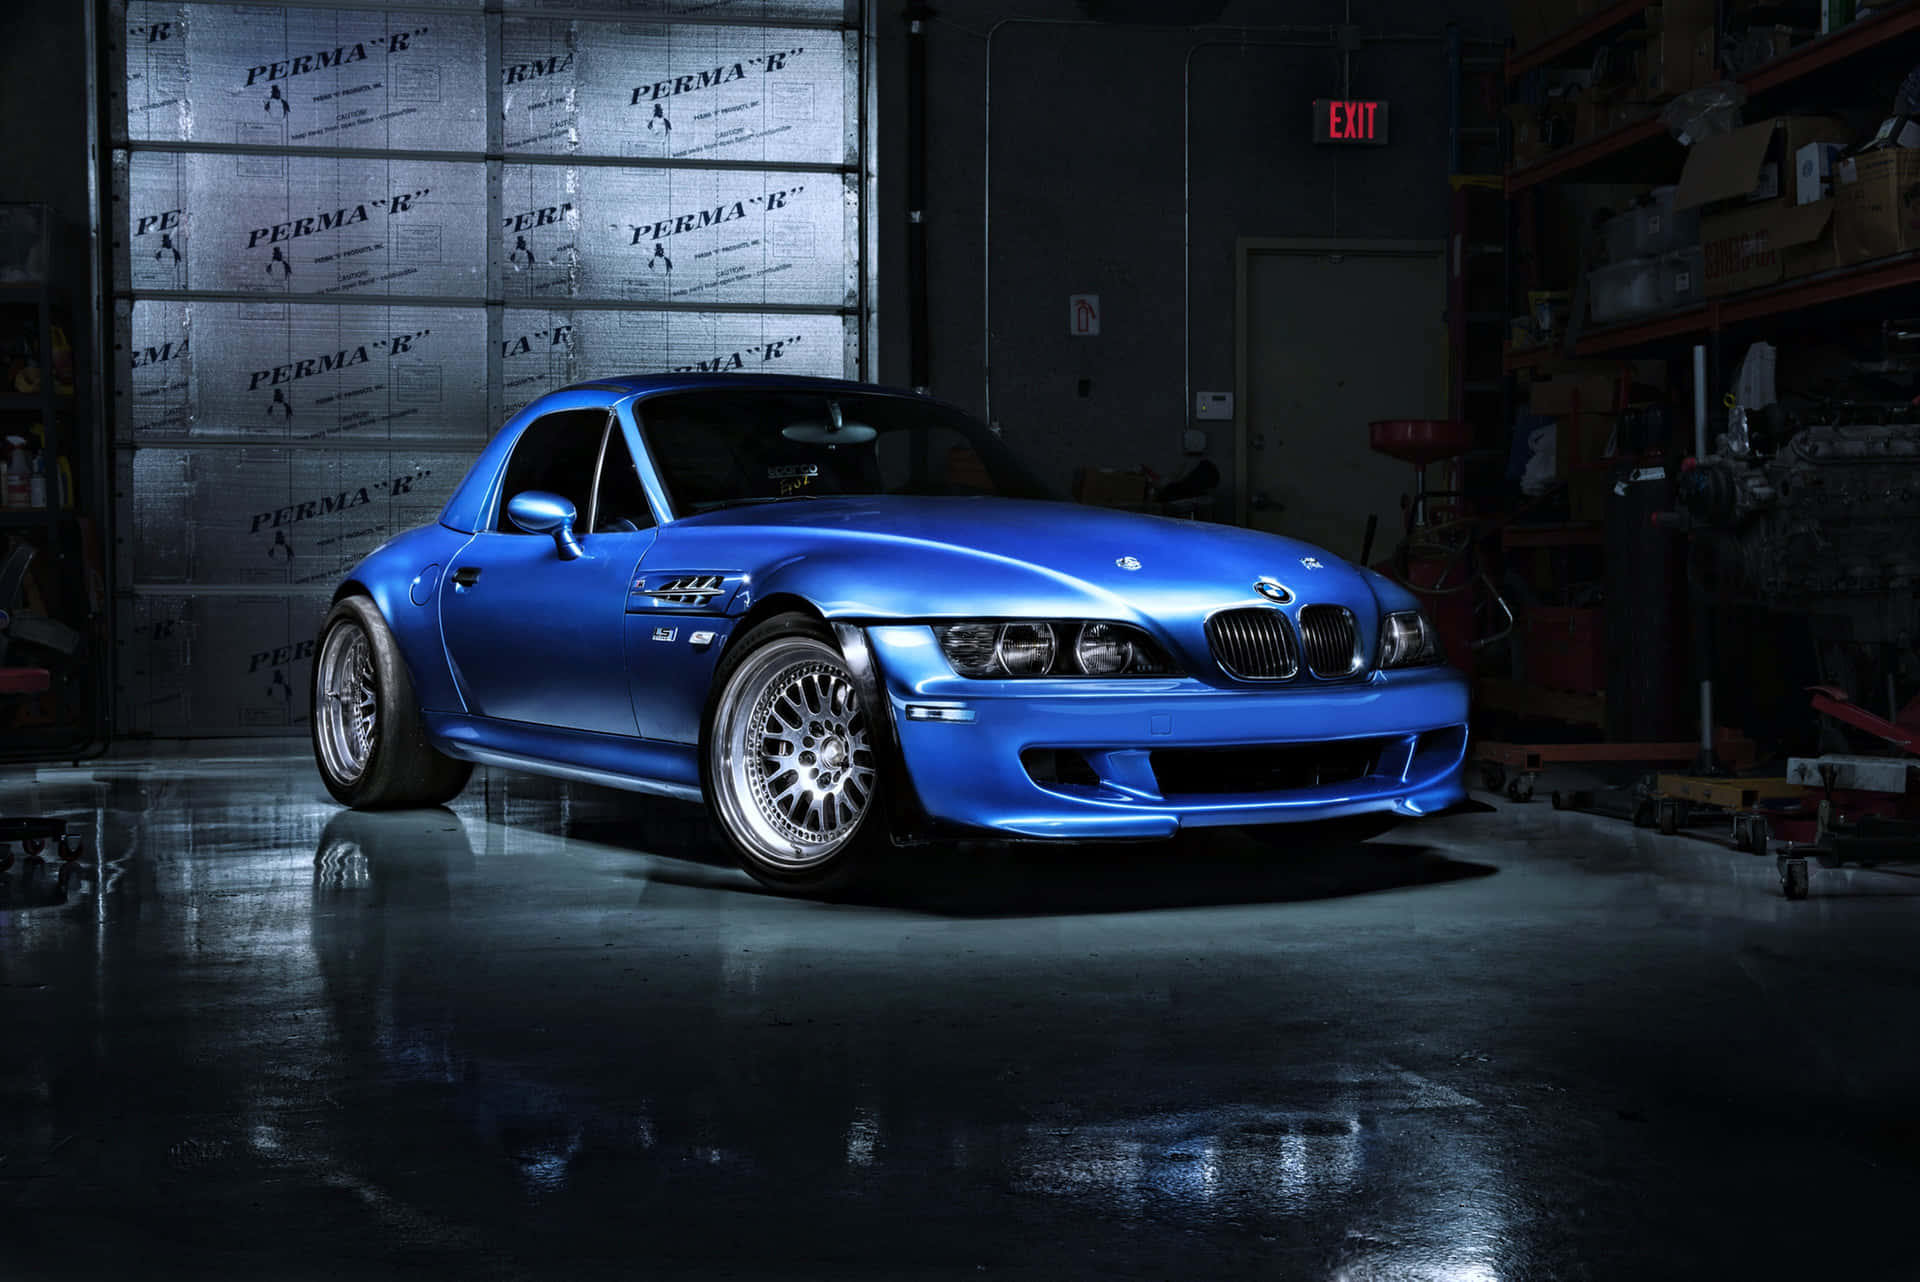 Caption: Sleek and Stylish BMW Z3 Roadster Wallpaper